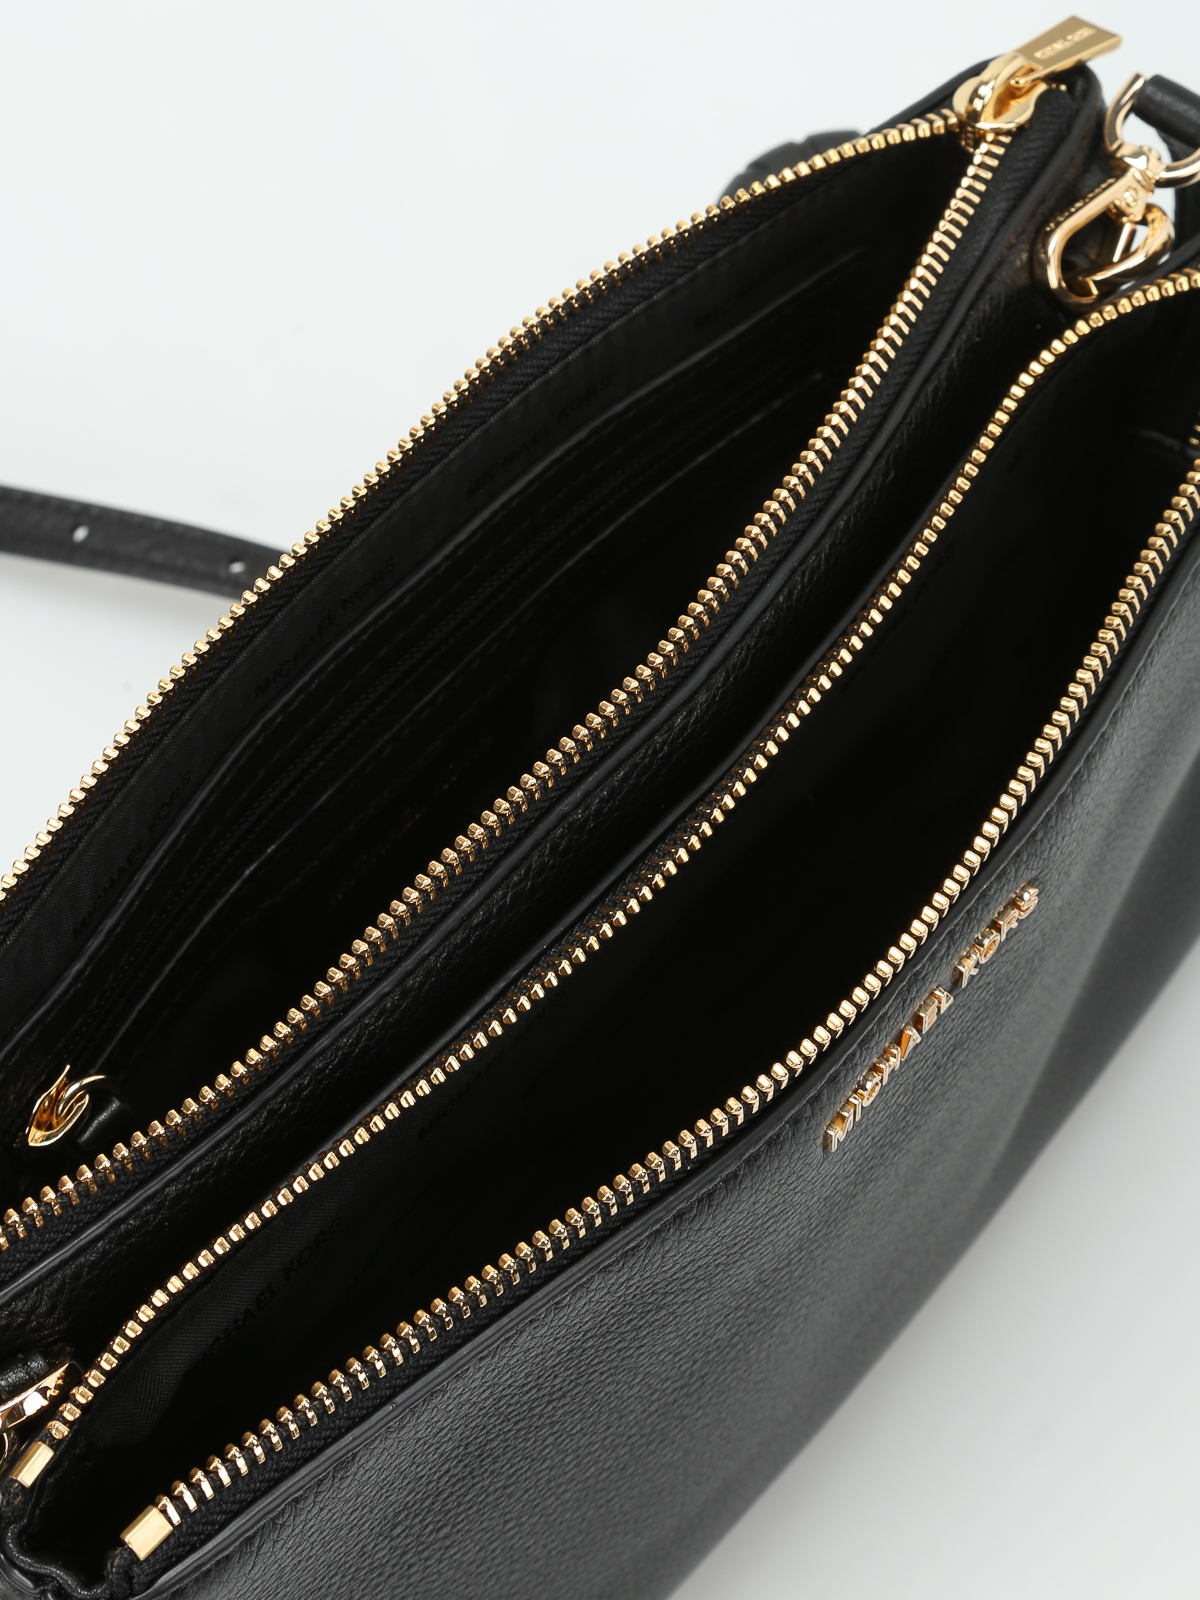 Michael Kors Adele Pebbled Leather Top Handle Shoulder Satchel Bag Handbag  (Small, Dark Khaki) Beige: Amazon.co.uk: Fashion